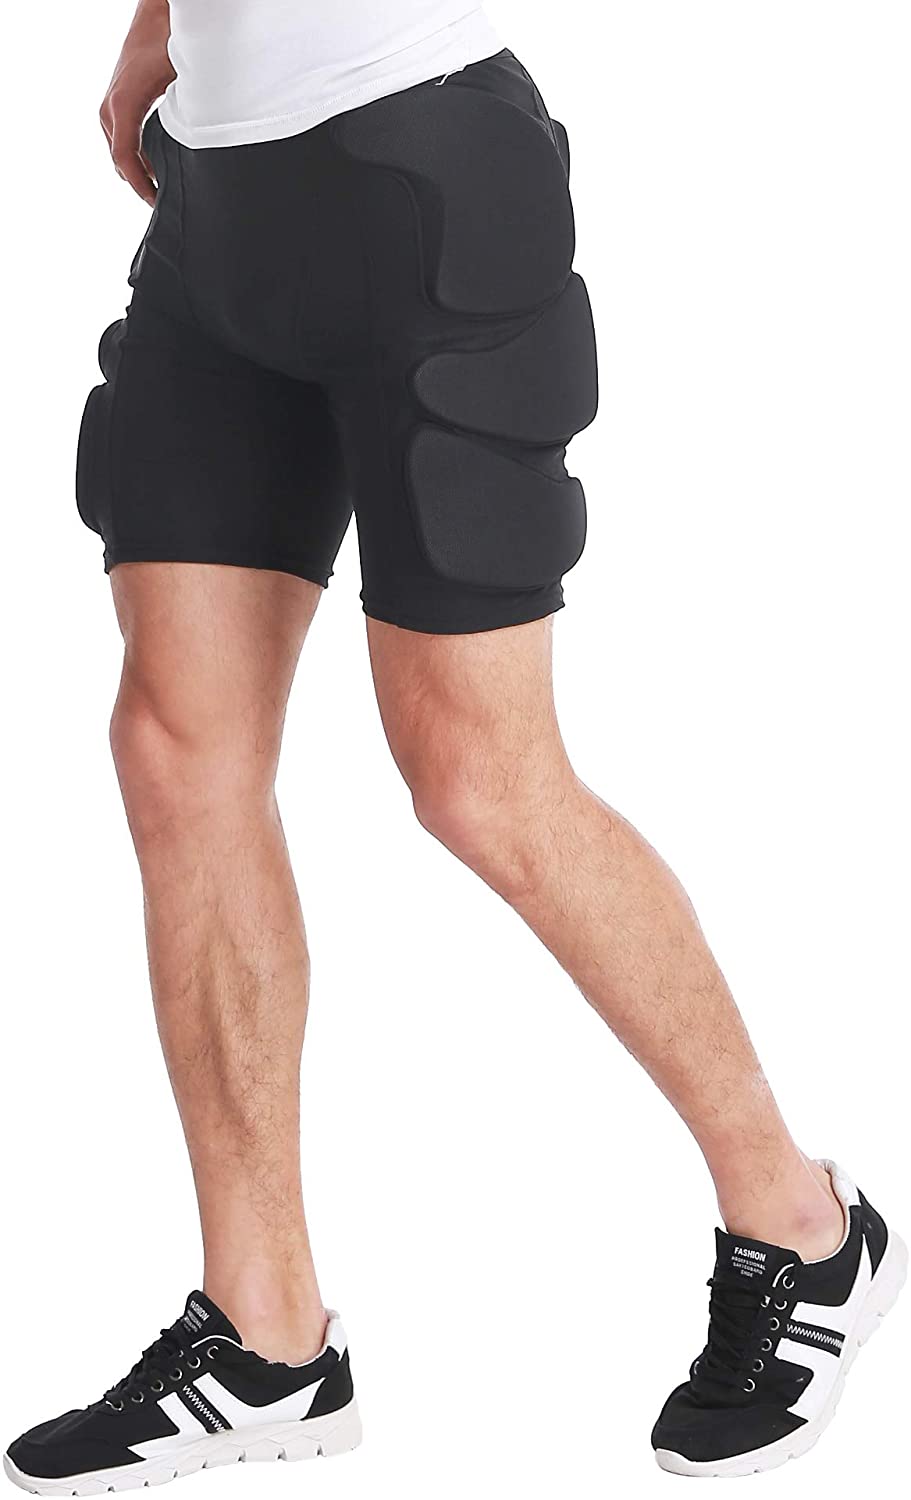 alvon Protective Padded Shorts for Women Kids Men Crash Butt Pads ...